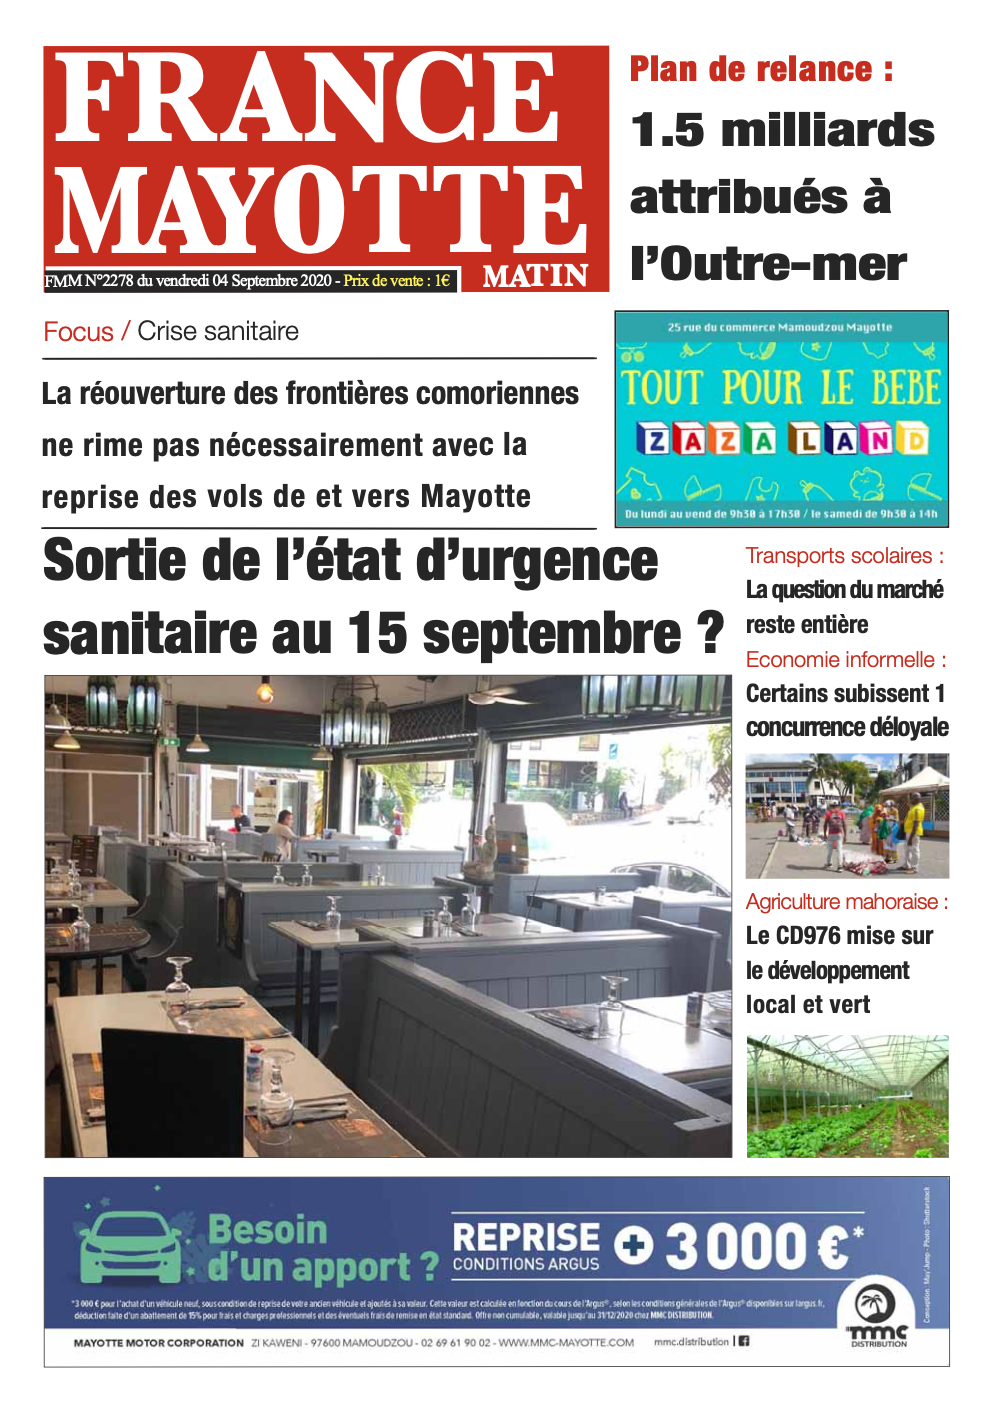 France Mayotte Vendredi 4 septembre 2020